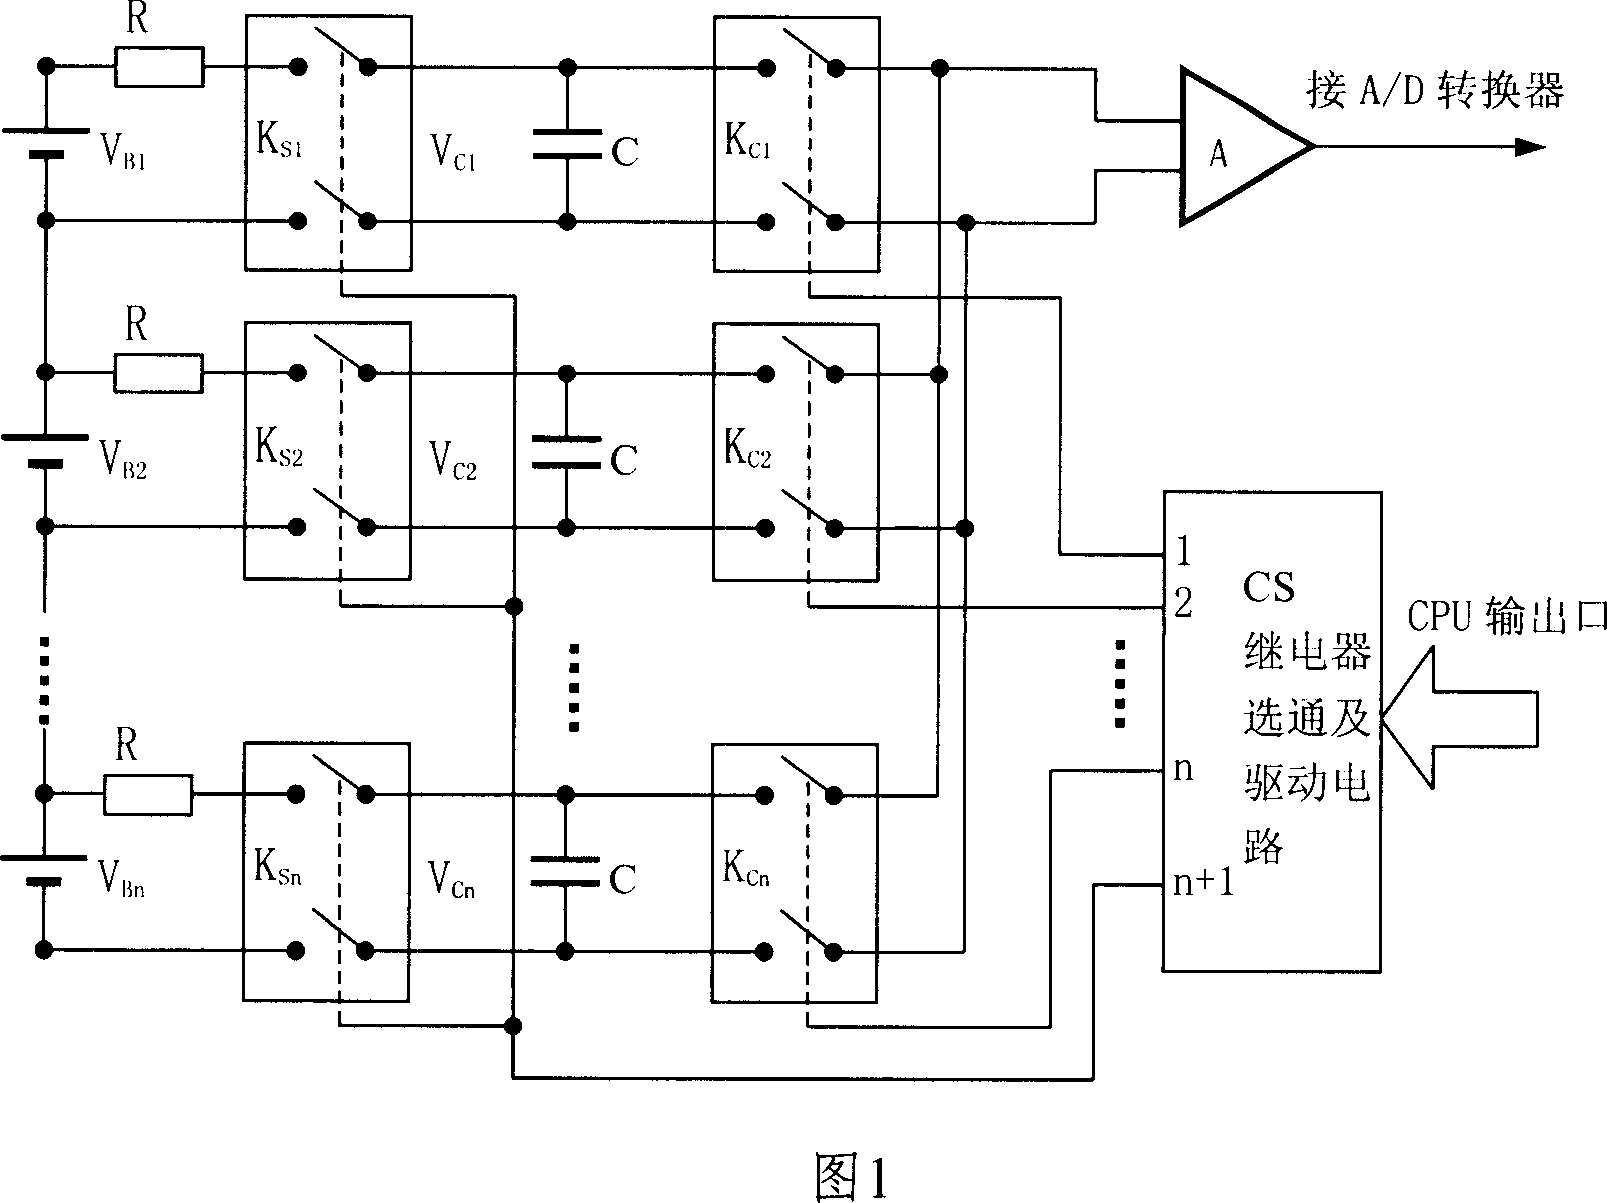 Circuit for measuring synchronized sampler of flying capacitance